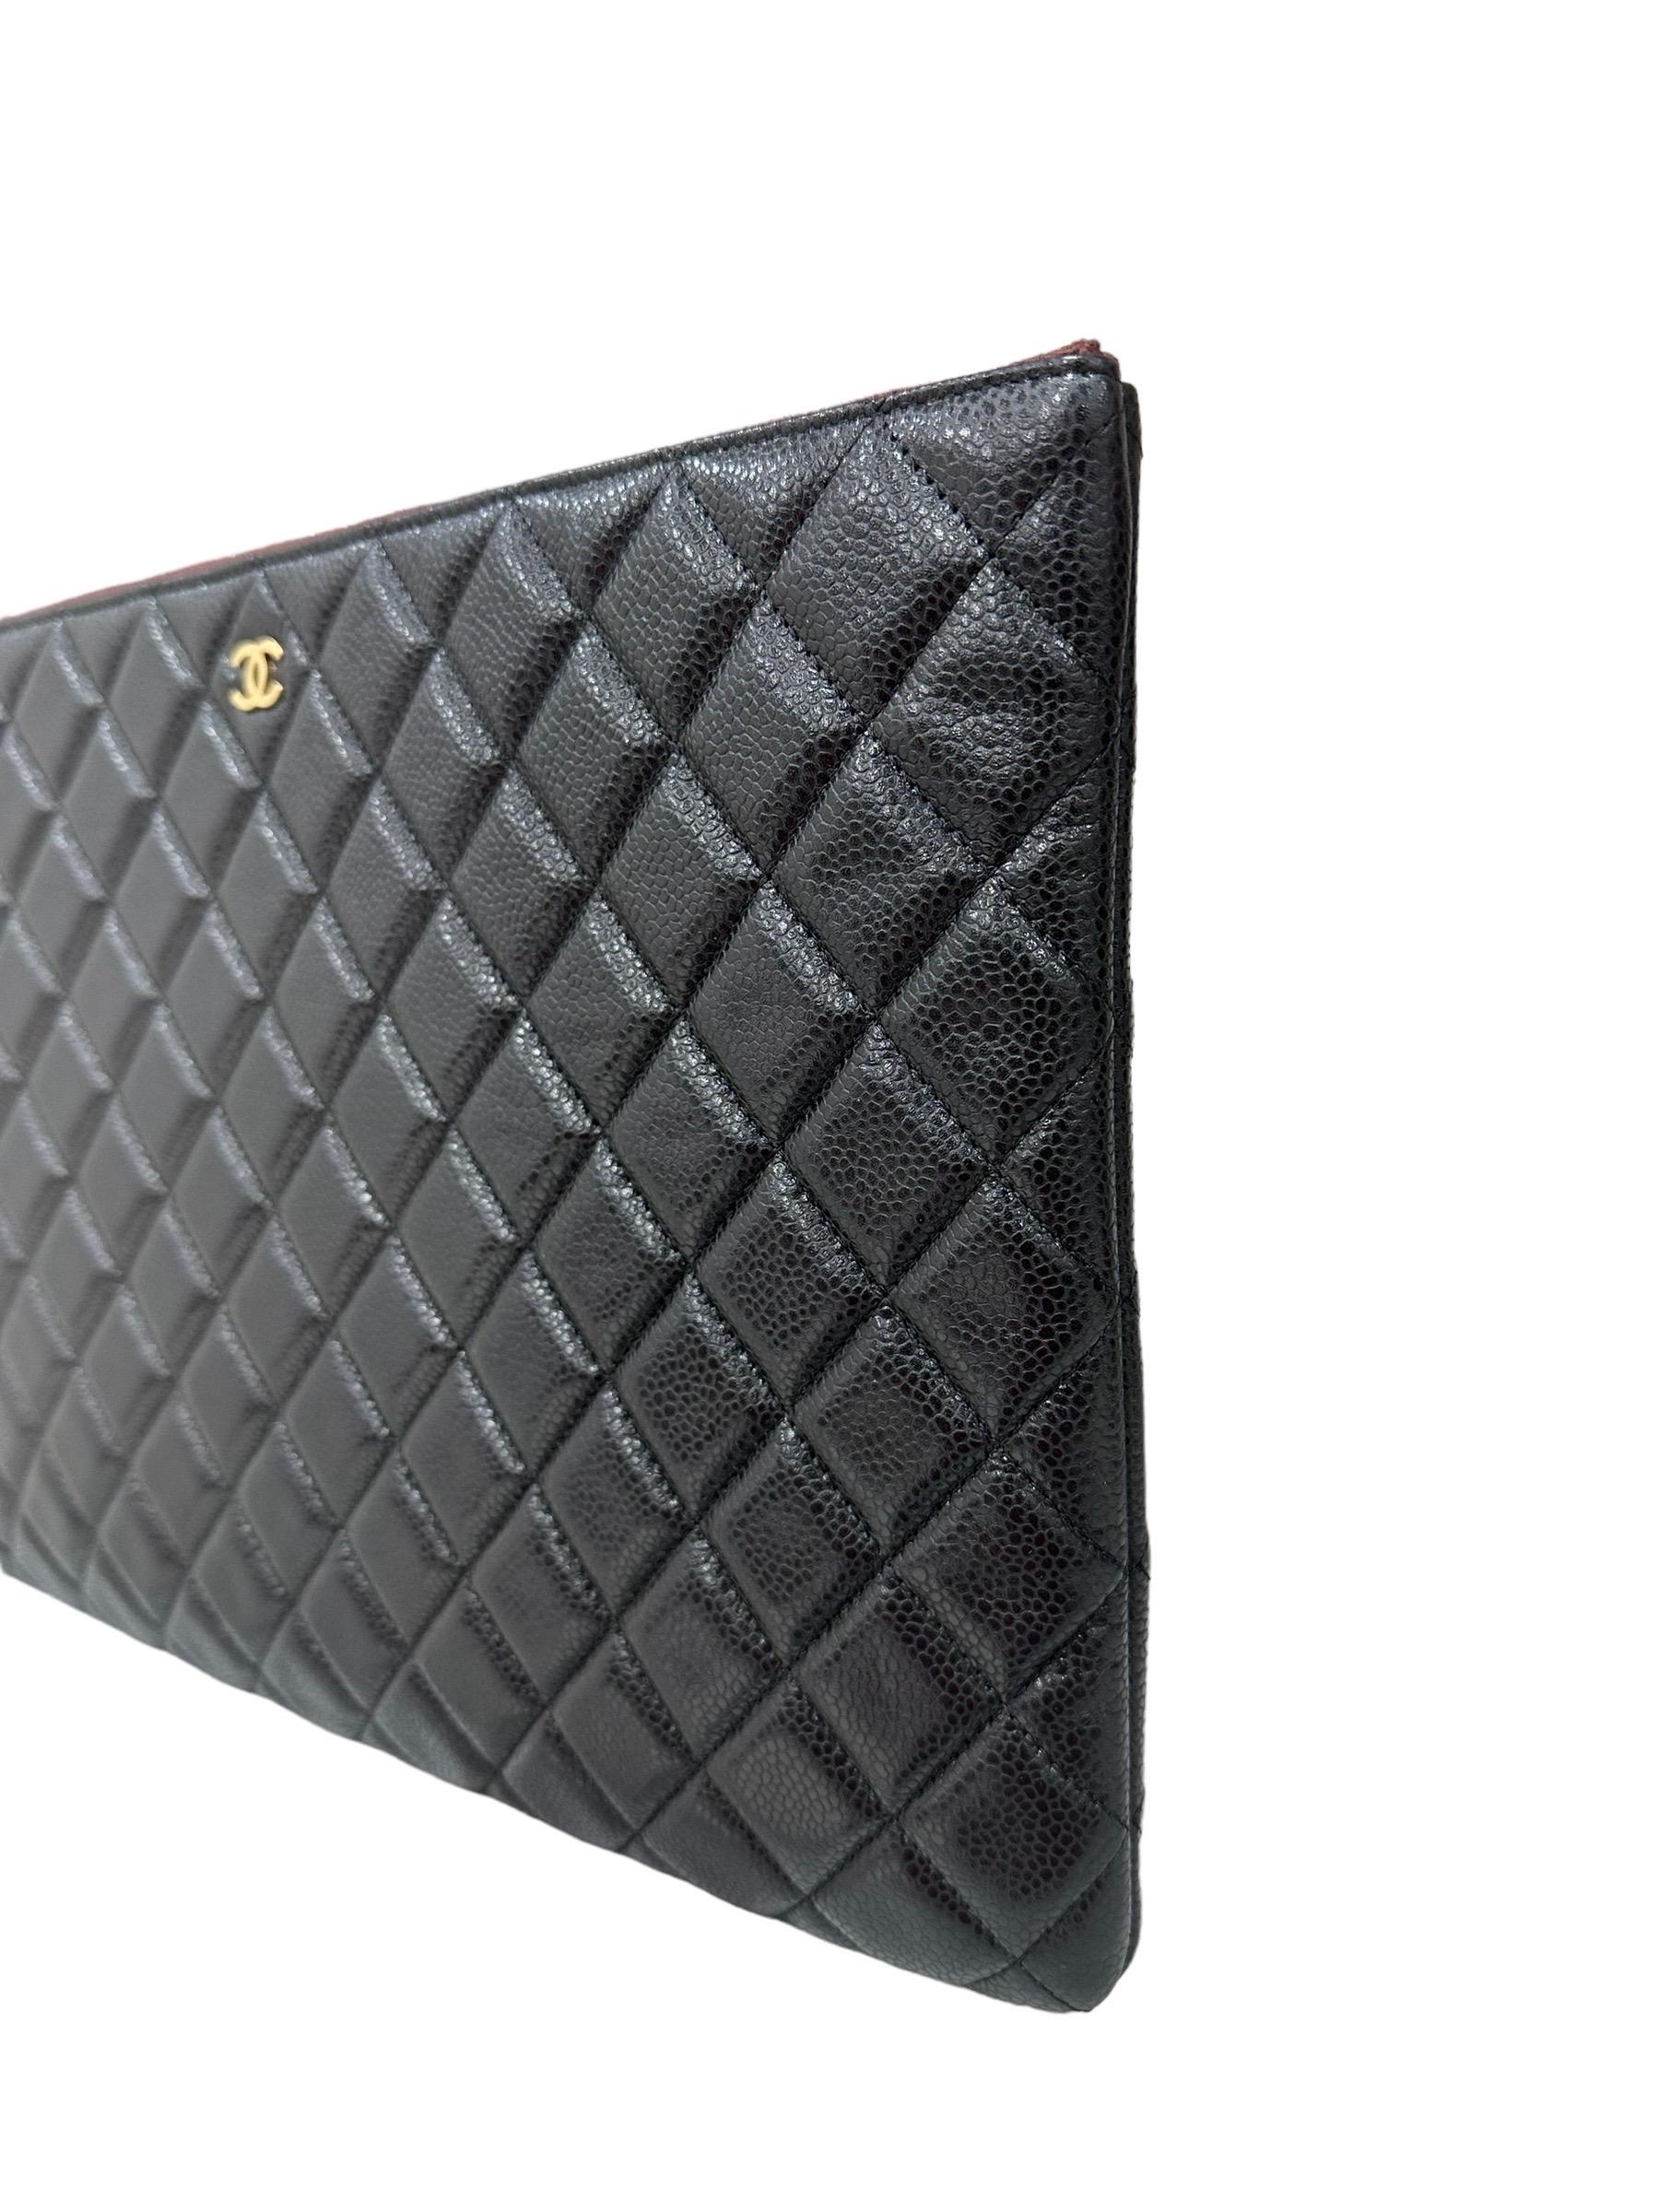 Women's 2016 Chanel Timeless Clutch Black Caviar Leather 